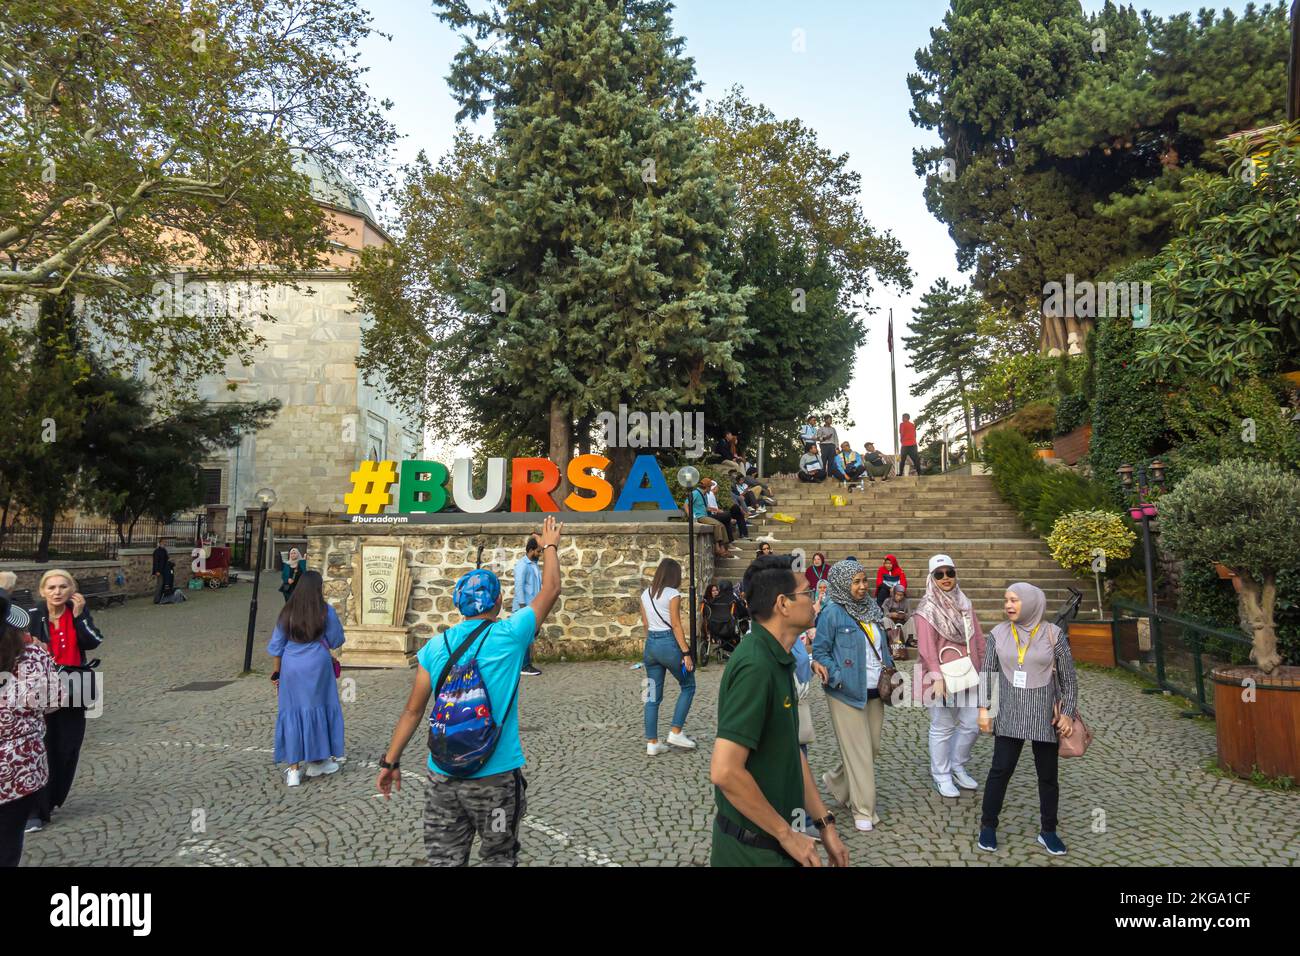 Bursa Turkey. Tourists take pictures, take selfies, photograph near colorful colourful city sign #BURSA. Old town Bursa travel Stock Photo